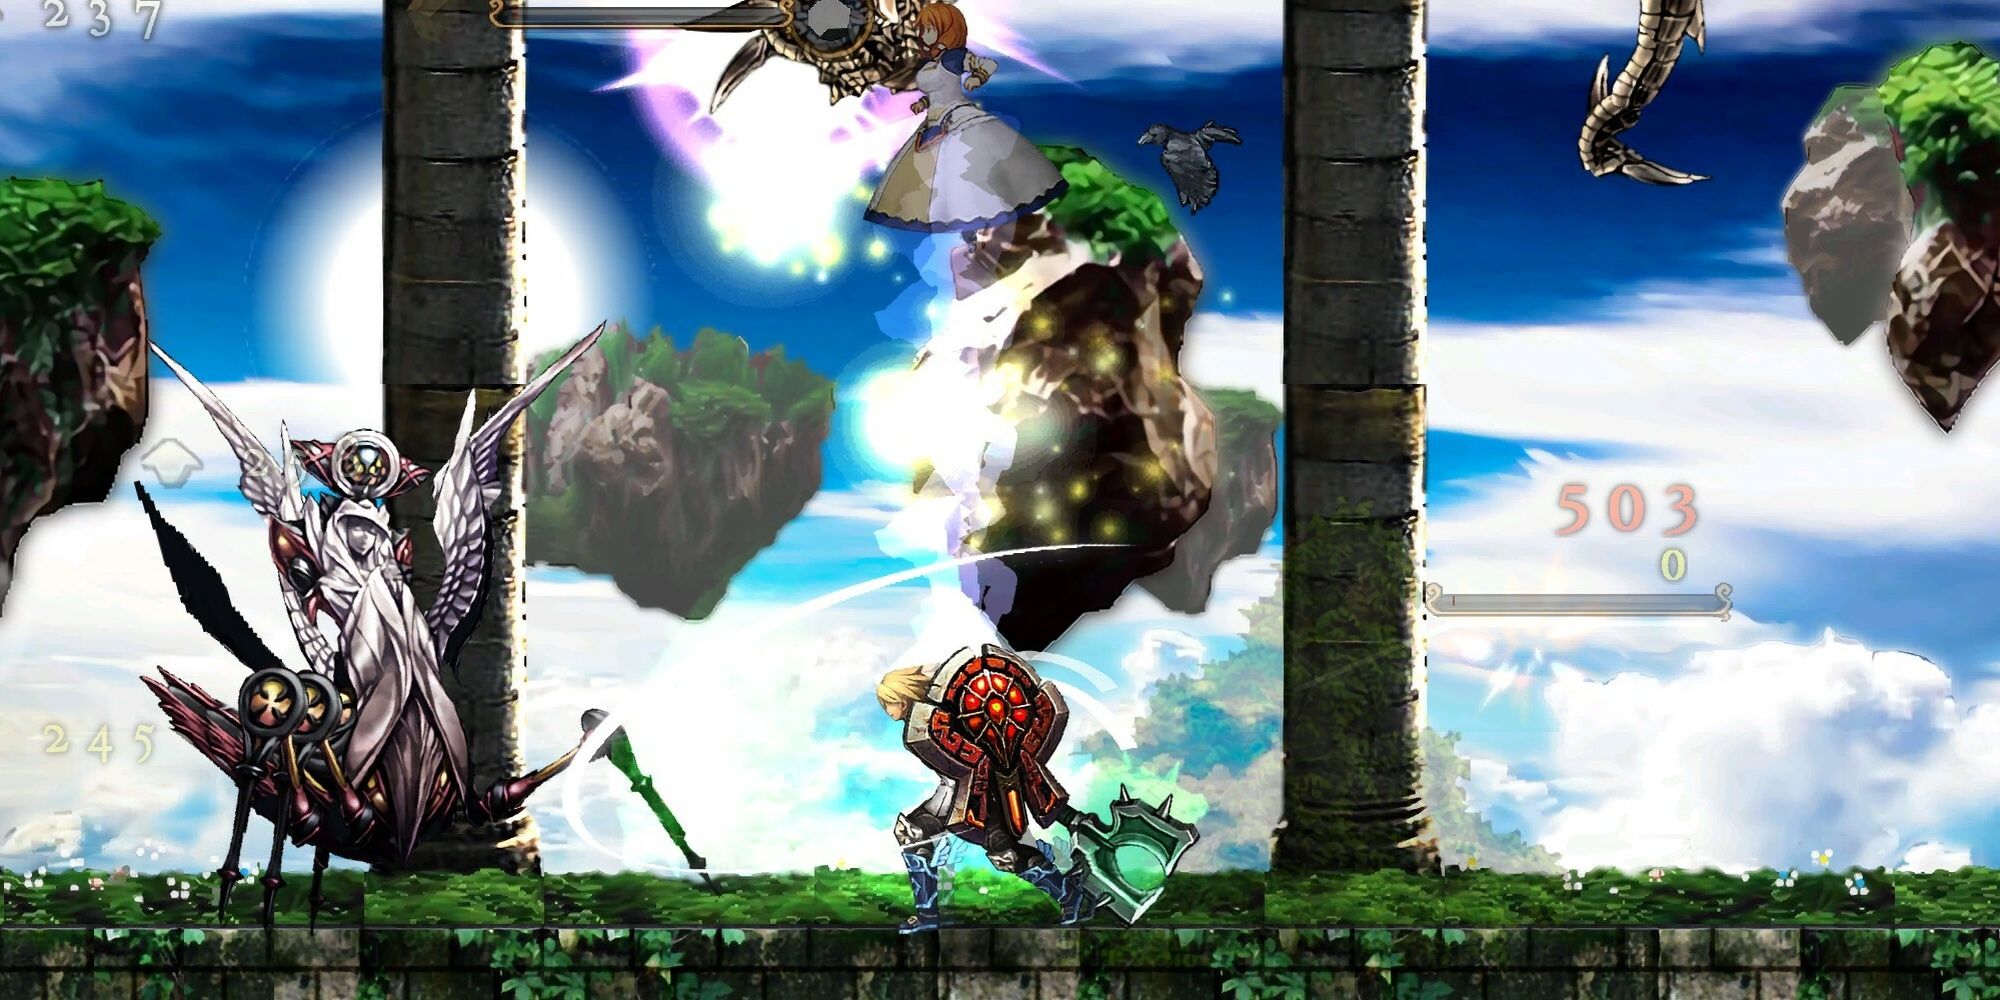 astlibra revision character battles enemies on a floating platform